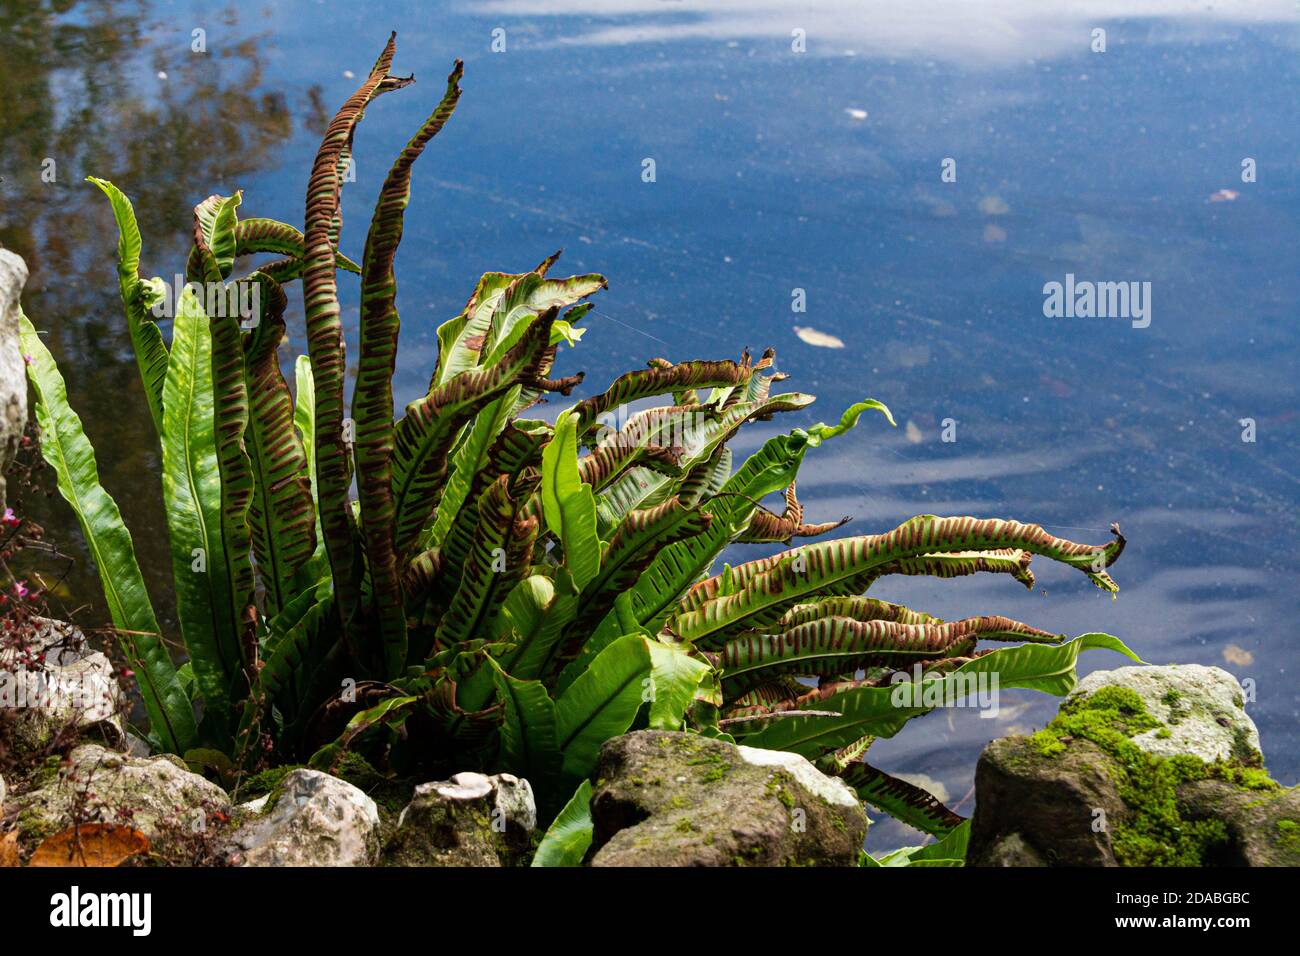 A hart's tongue fern (Asplenium scolopendrium) growing on rocks next to a lake Stock Photo